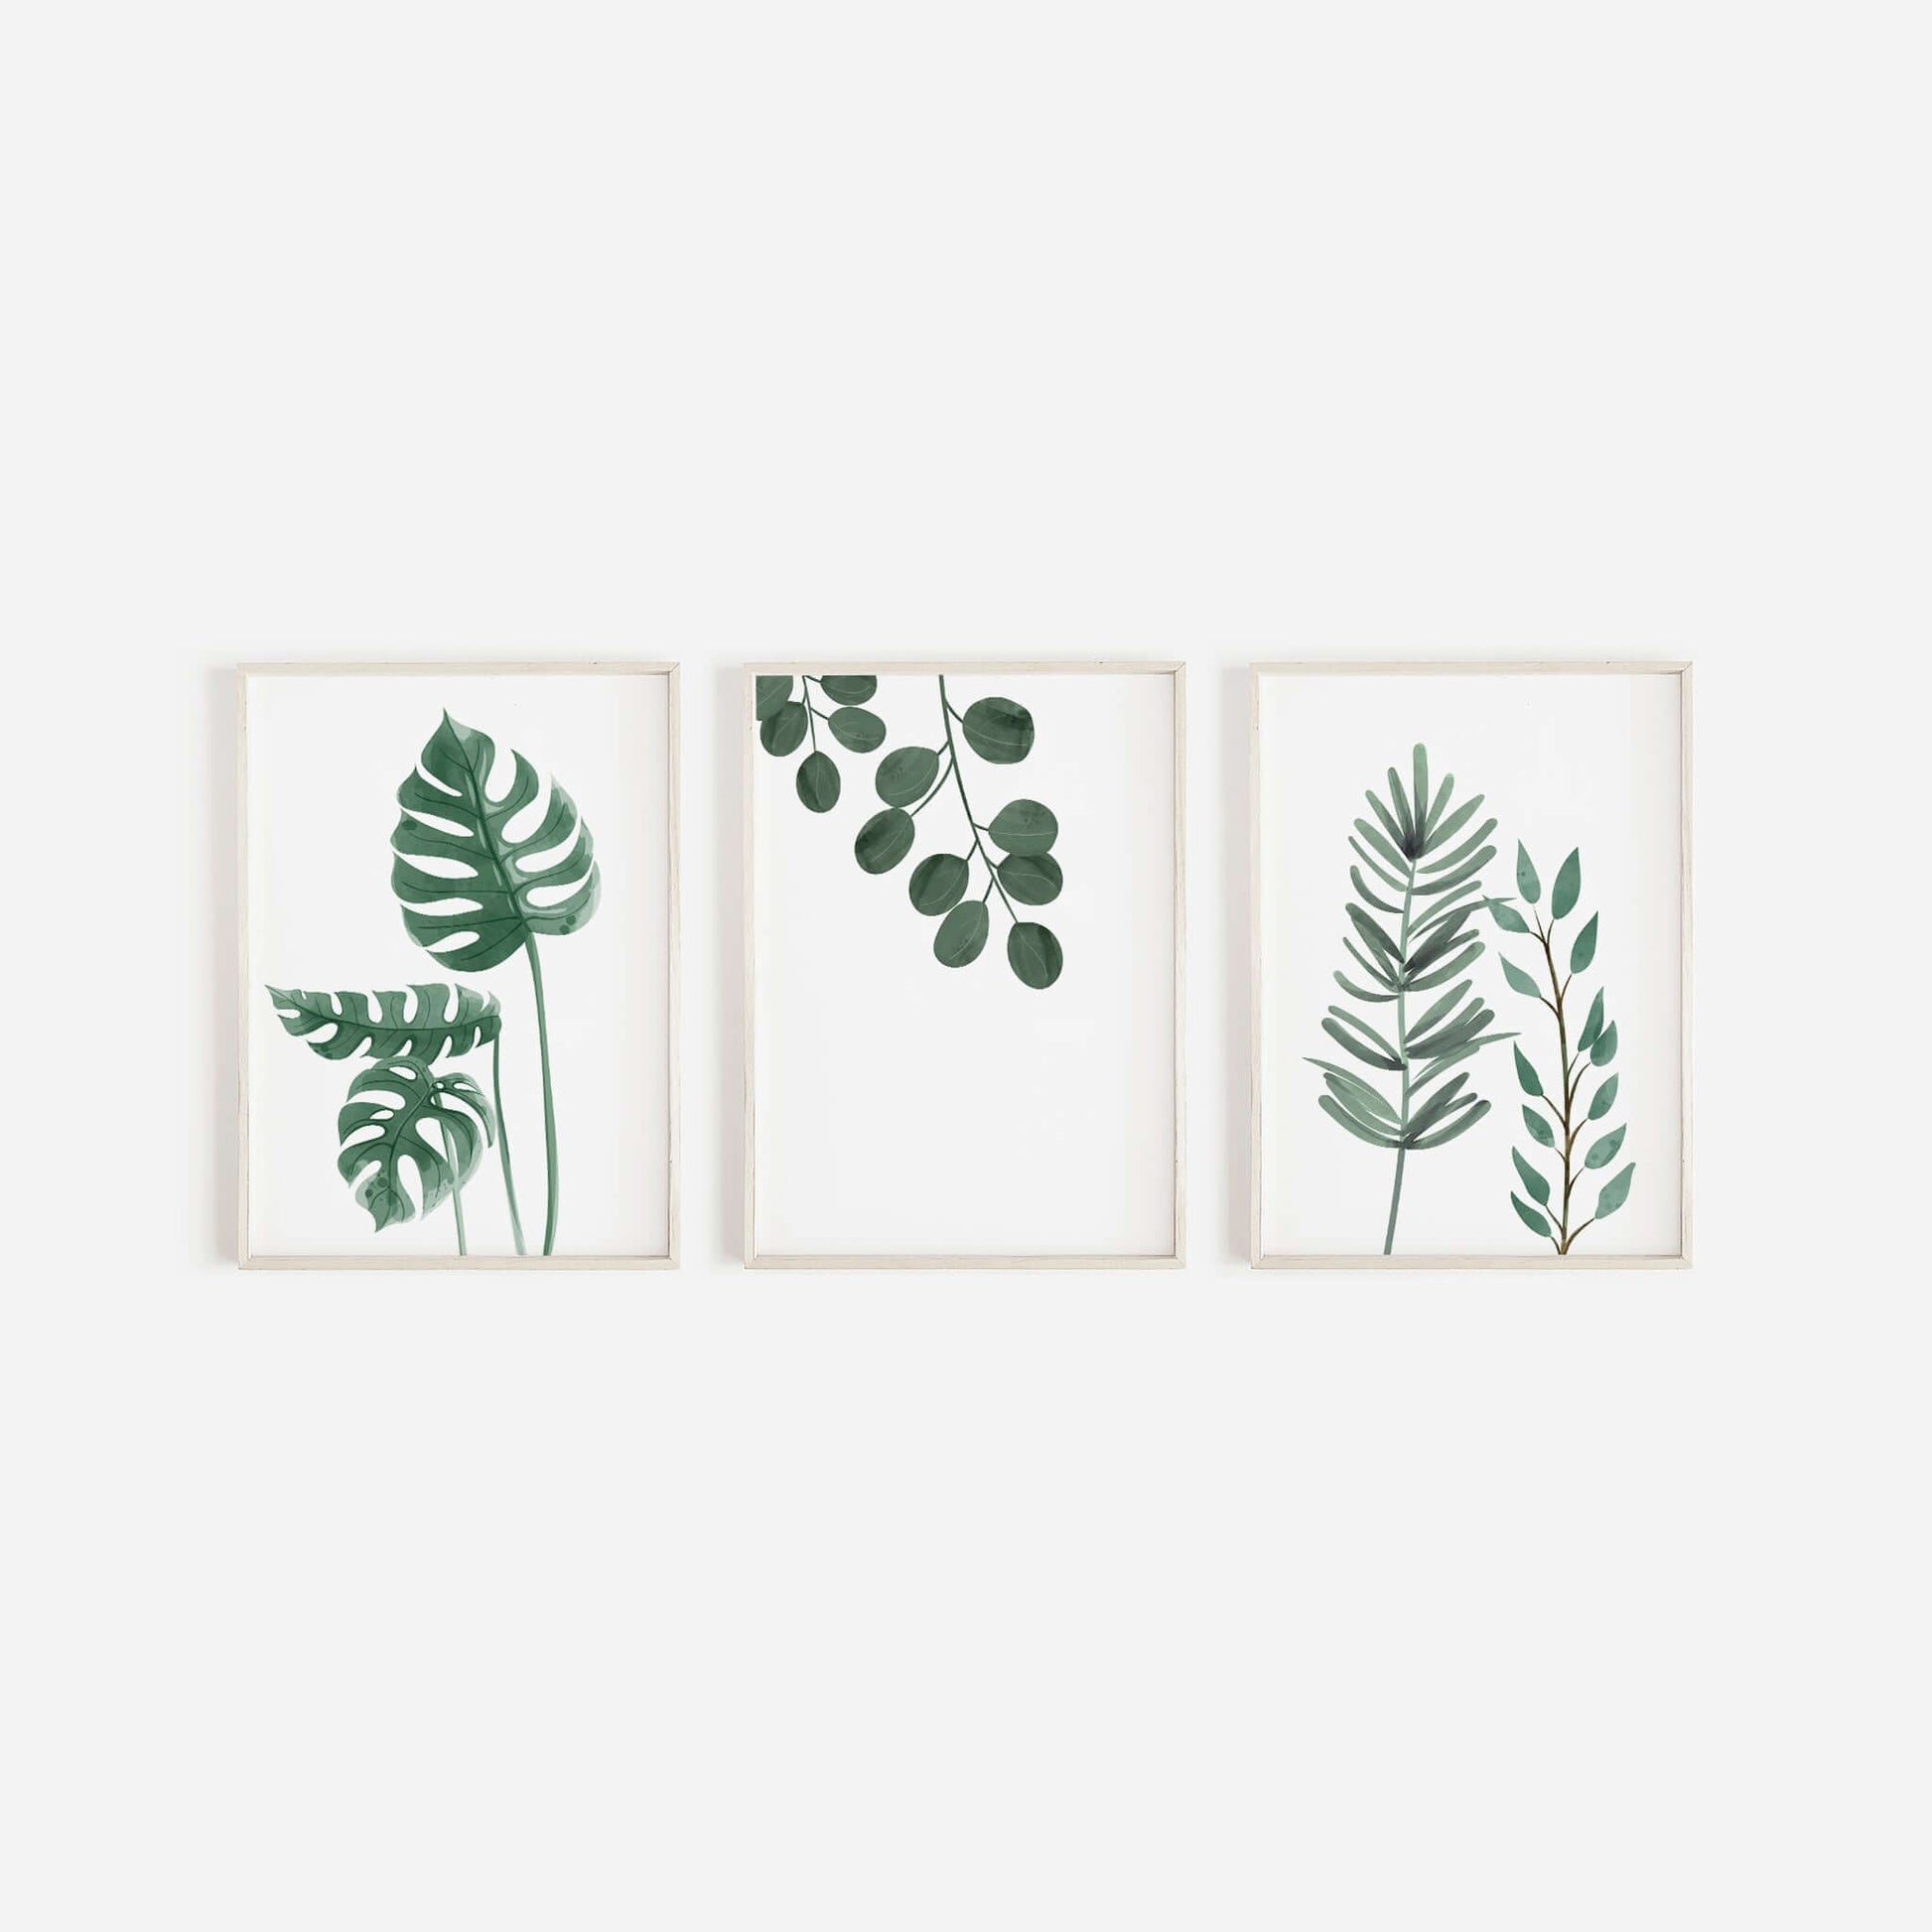 Botanical Prints, Set of 3 Prints, Wall Art, Home Decor, Bathroom Decor, Botanical Illustration, Leaf Prints, Bathroom Prints, Home Prints - The Gift Studio